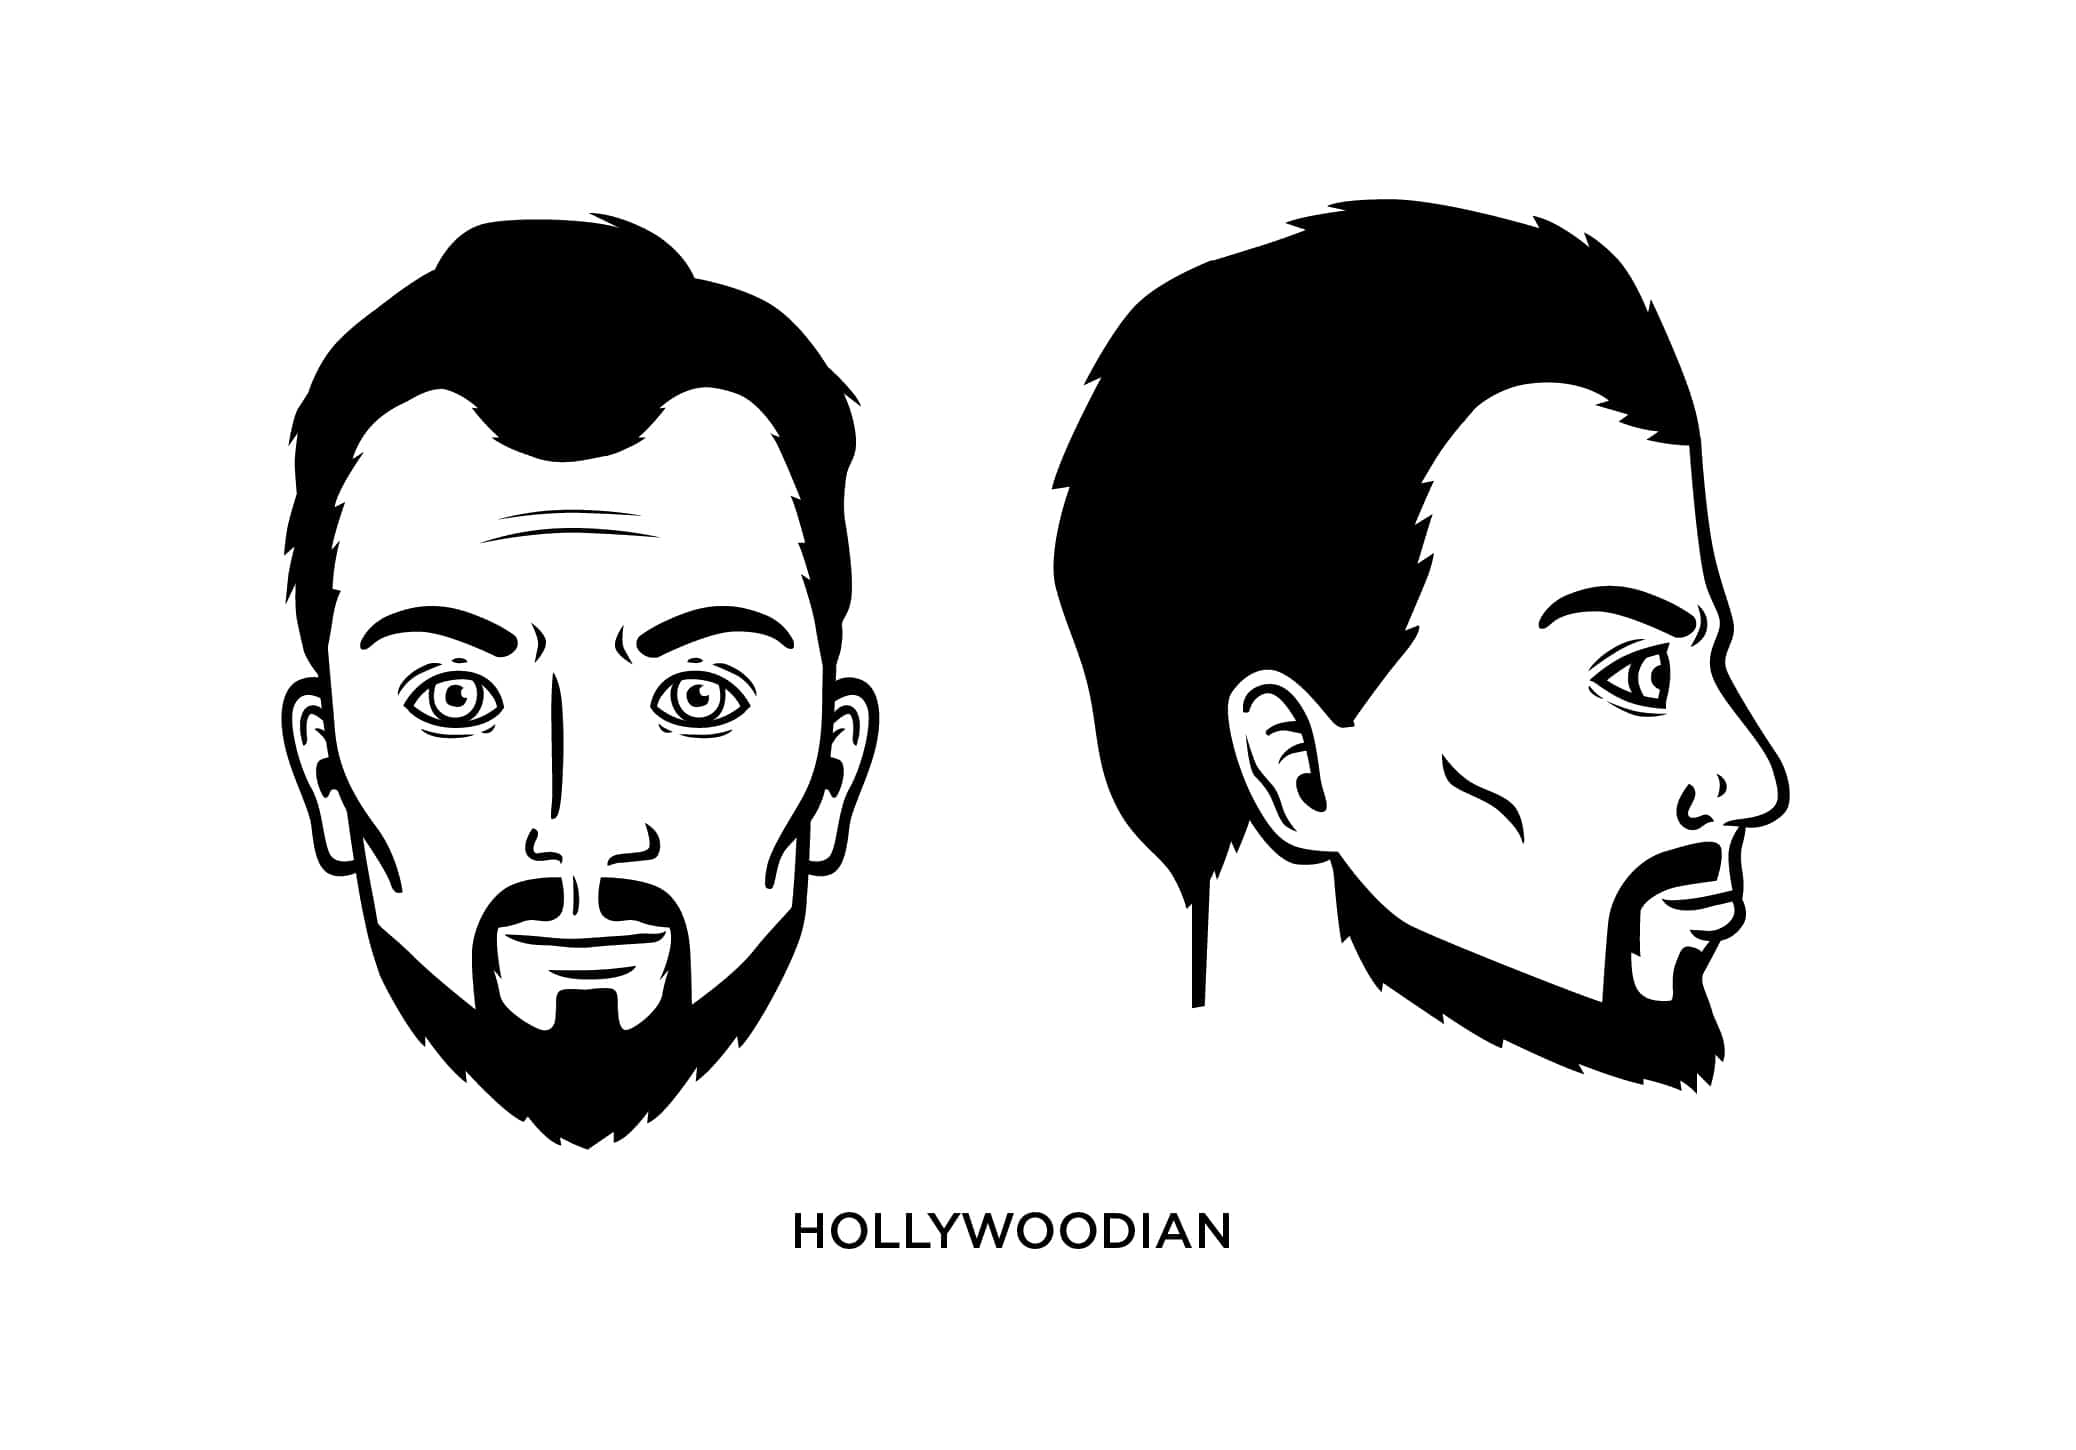 The Hollywoodian beard style